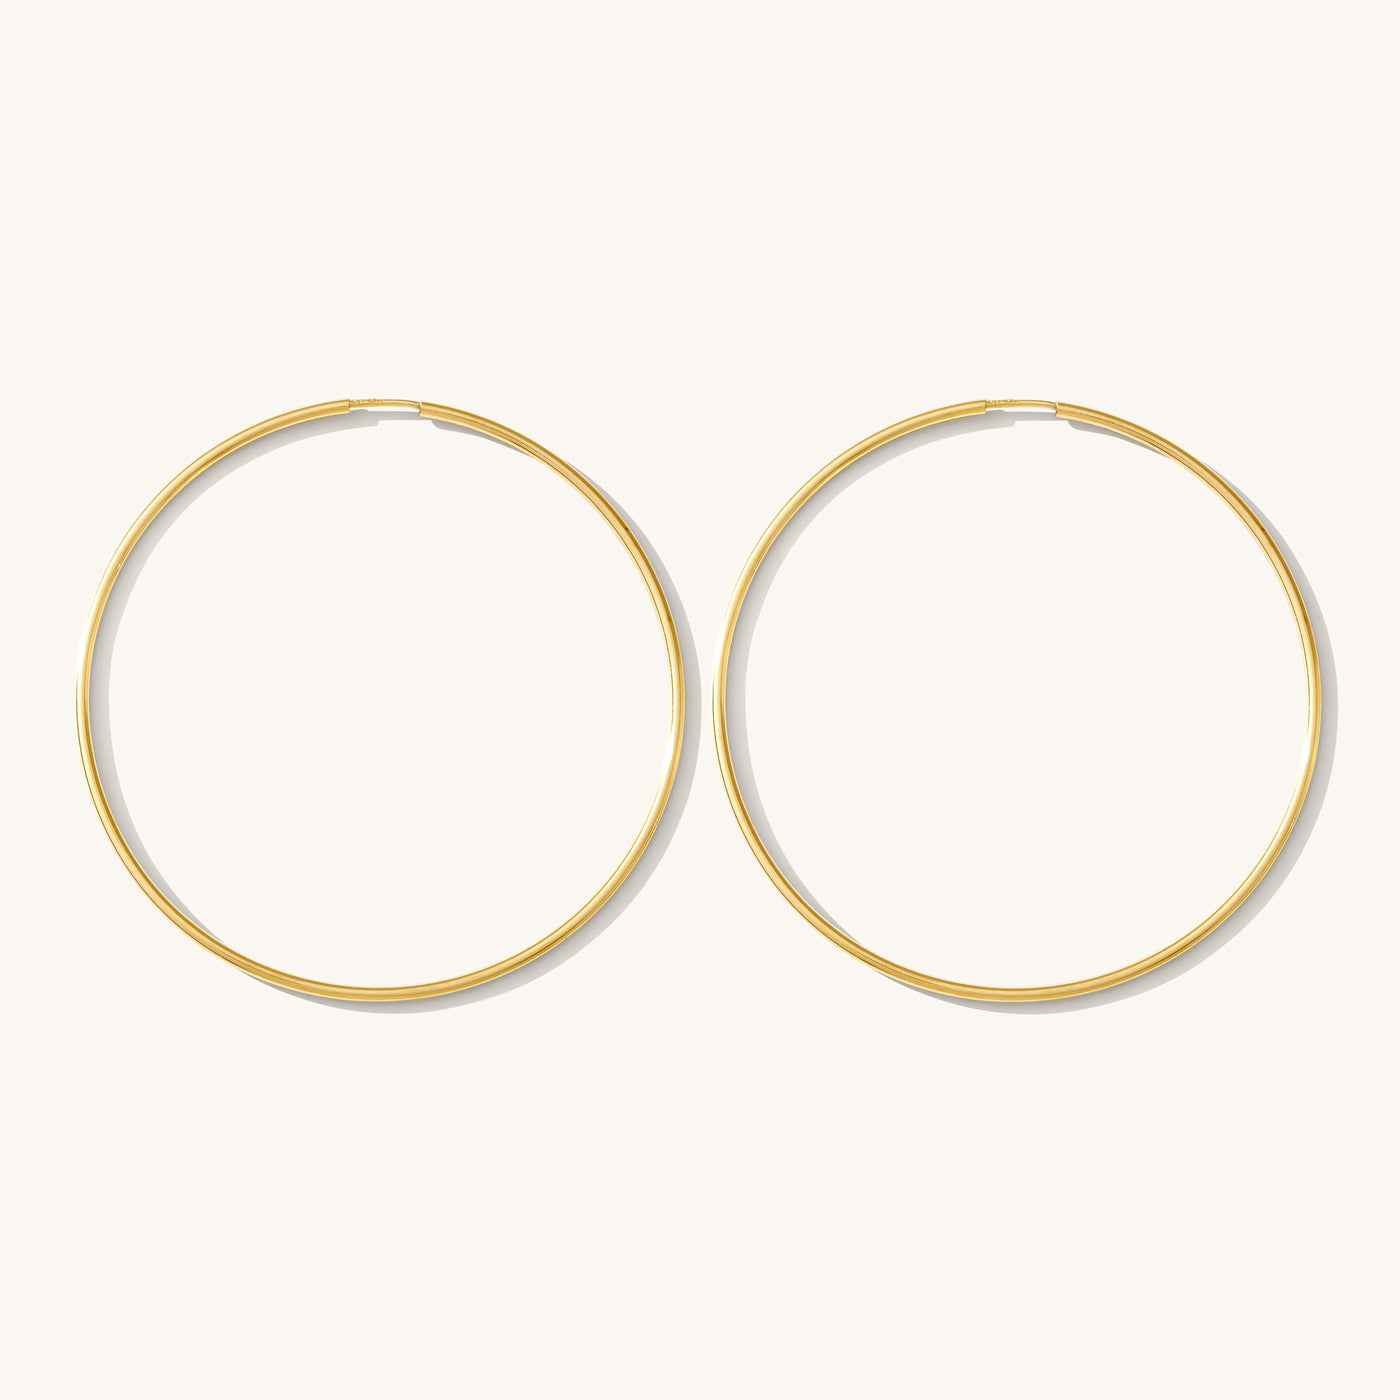 2X-Large (50mm) Thin Hoop Earrings | Simple & Dainty Jewelry